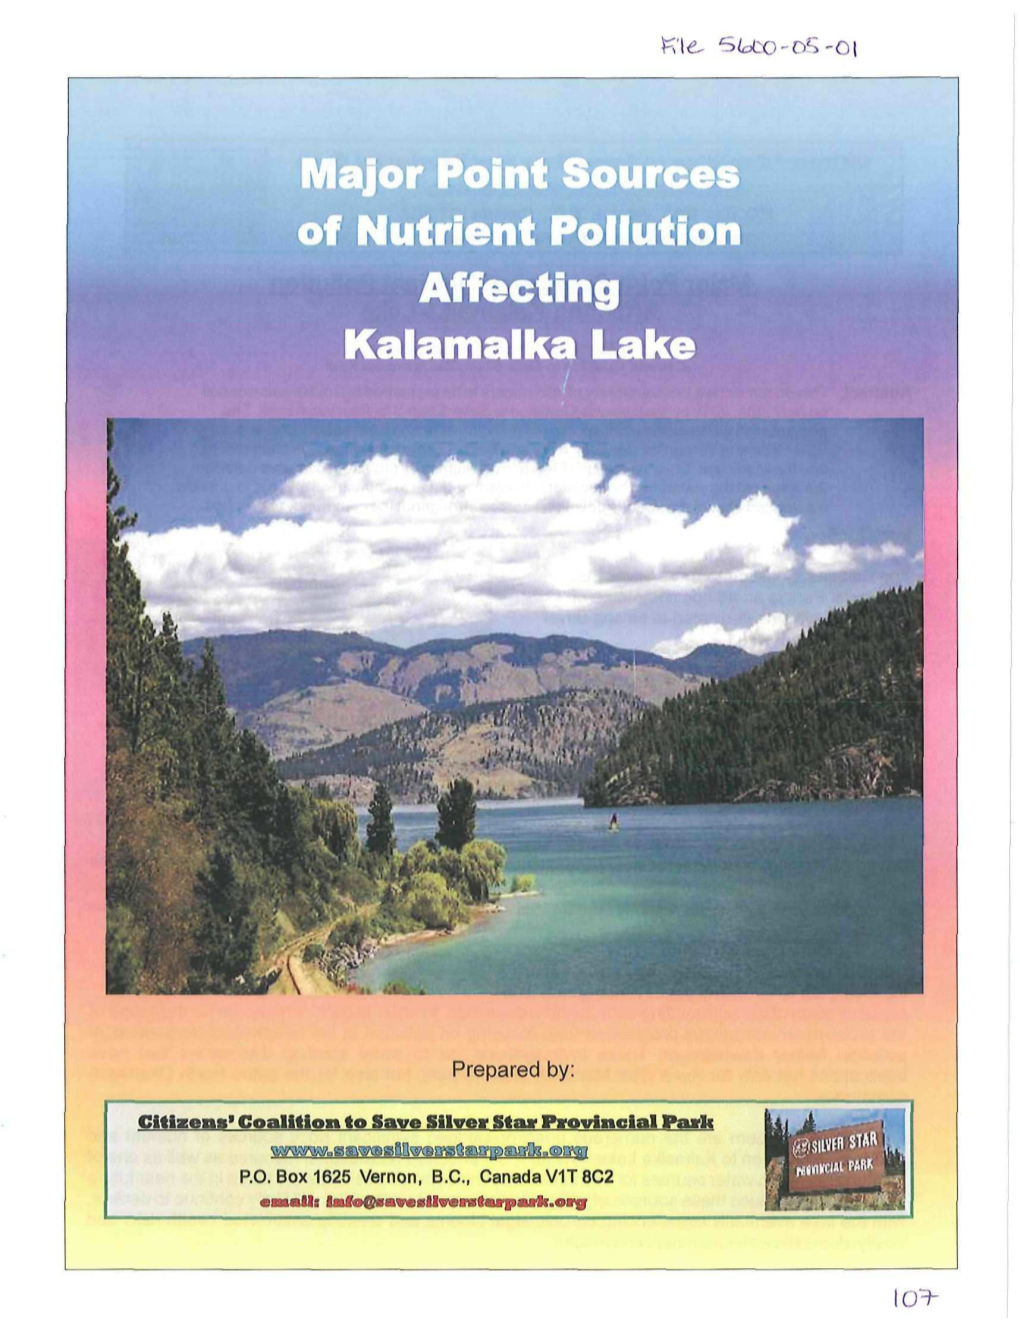 Itrient Pollution Affecting Kalamalka Lake